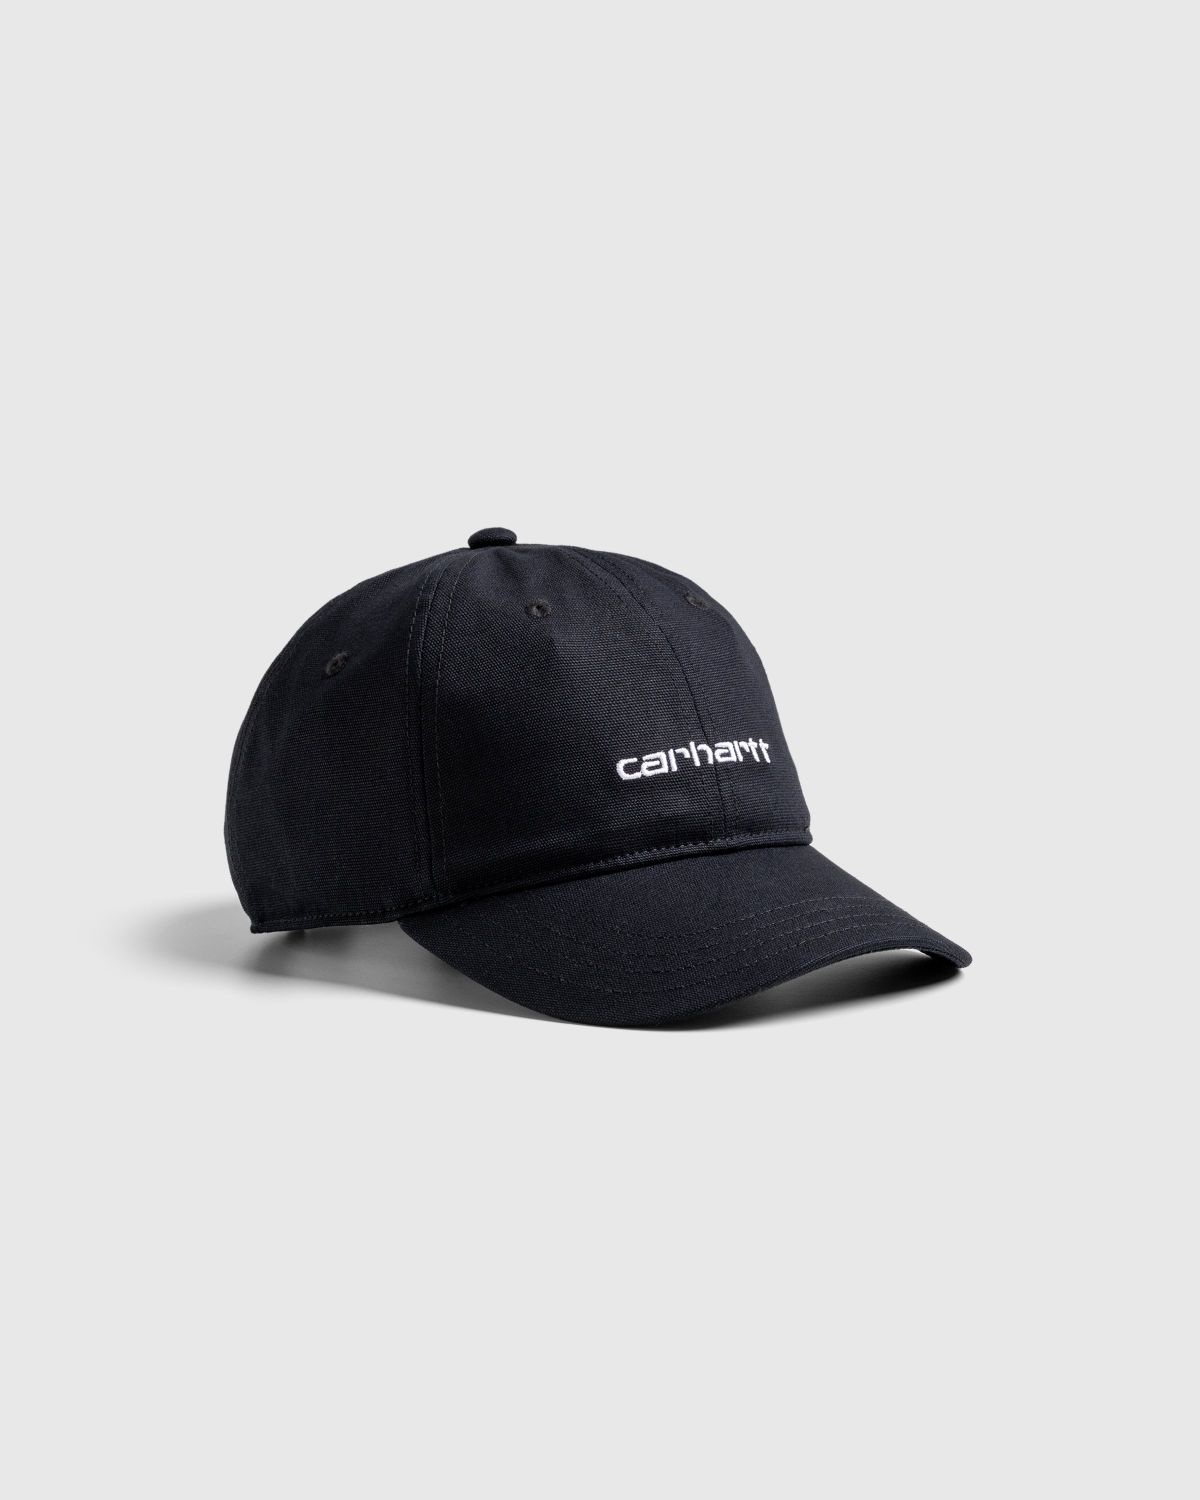 Carhartt WIP – Canvas Script Cap Black/White - 1